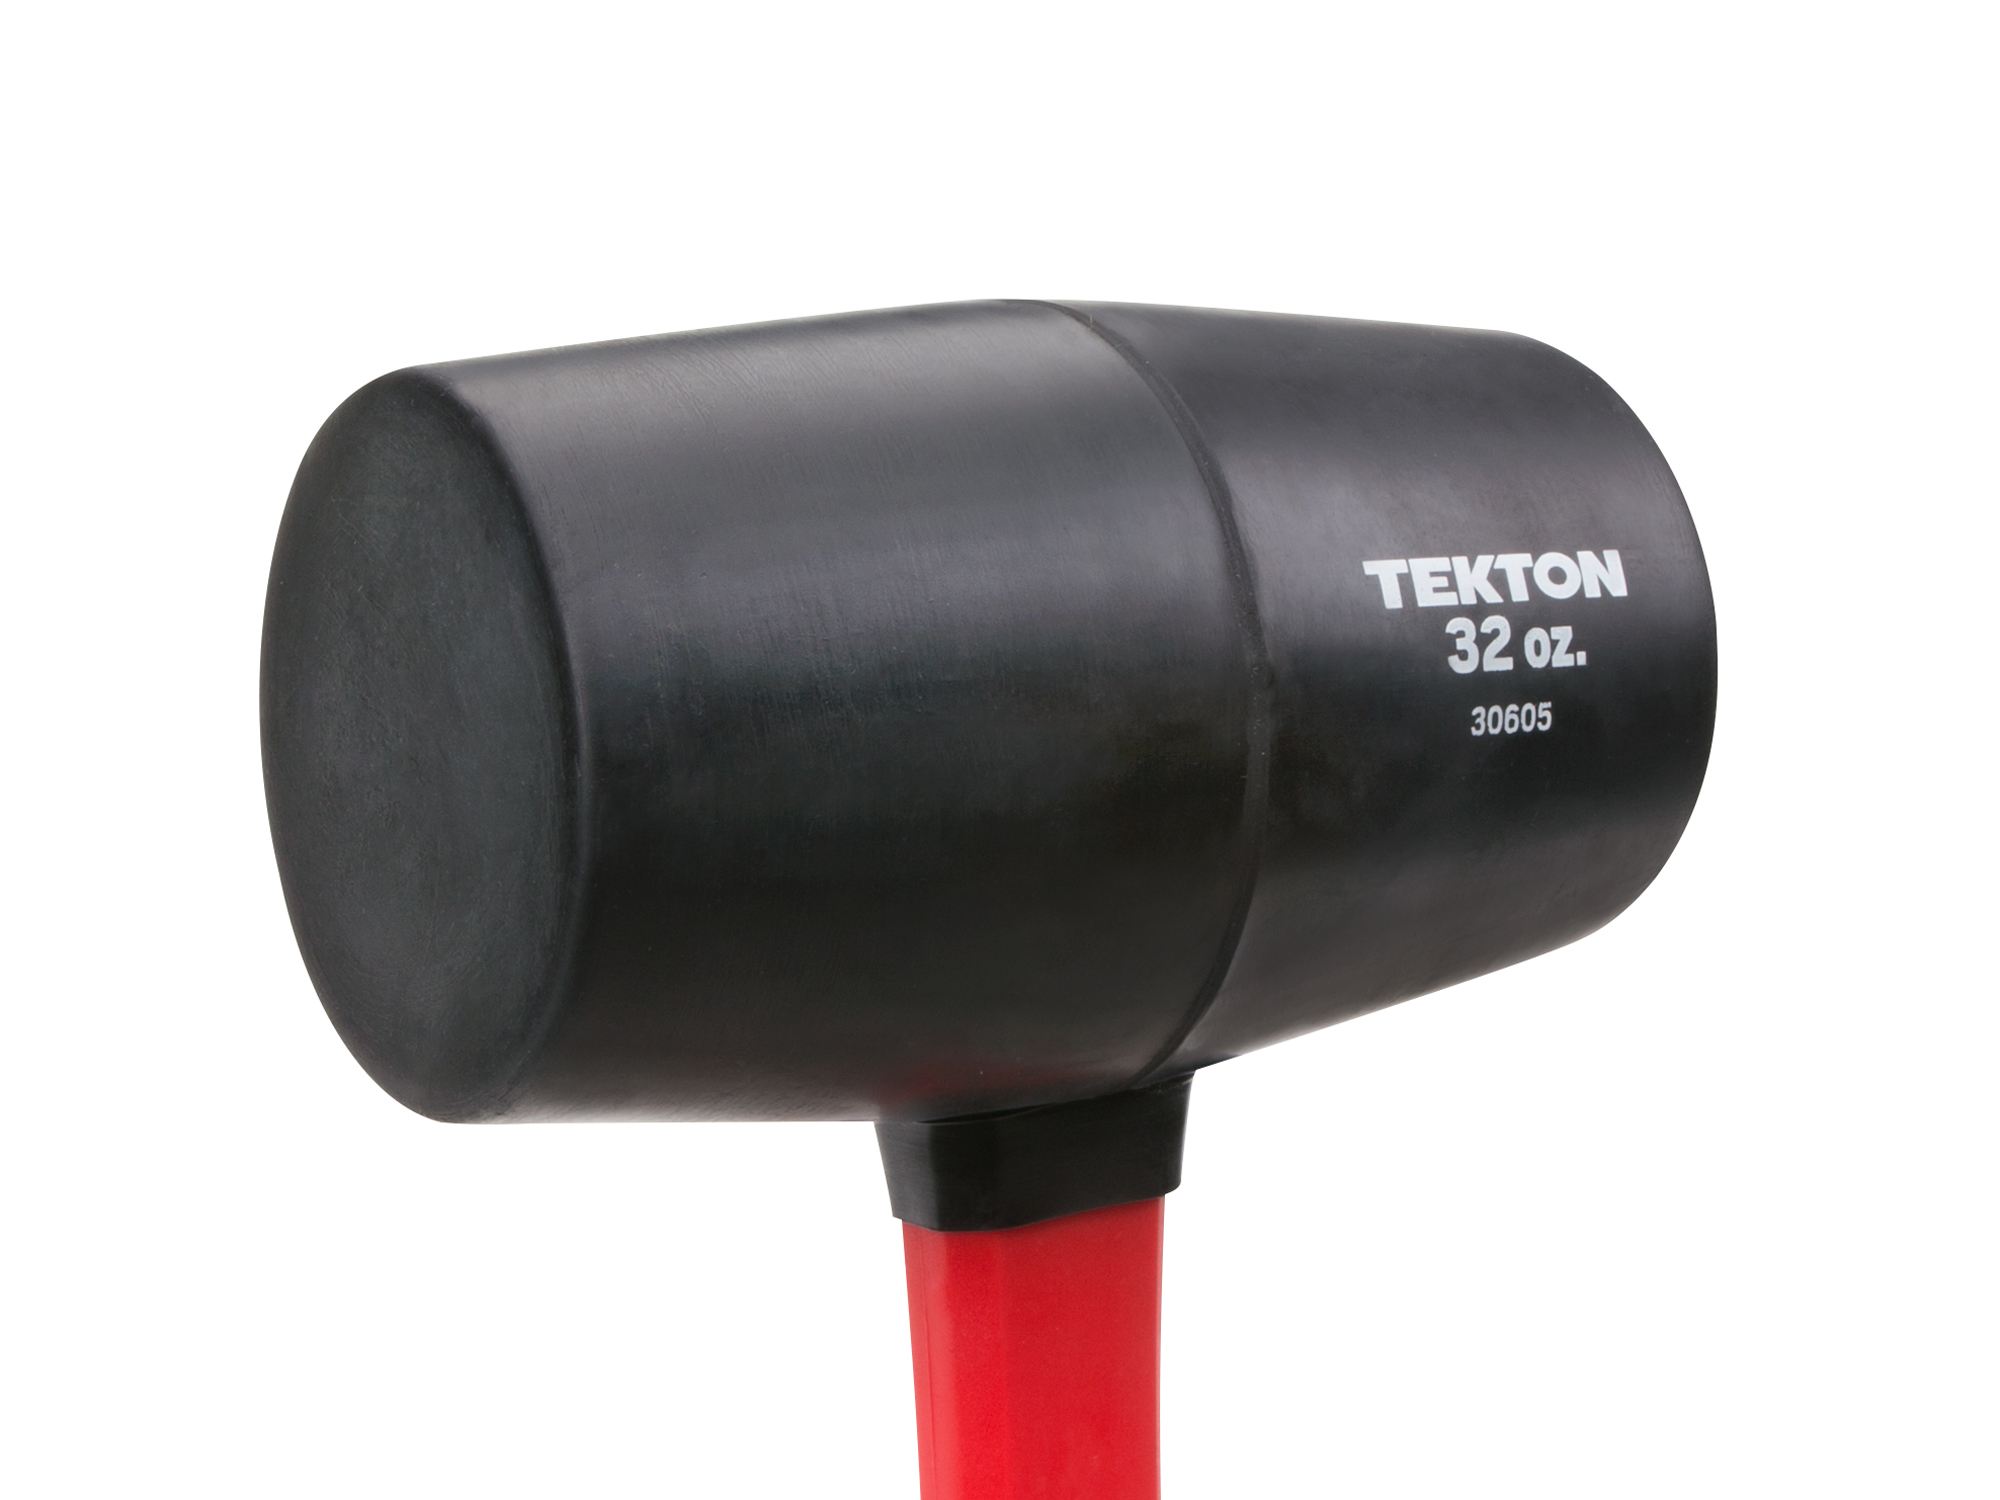 TEKTON 32 oz. Fiberglass Handle Rubber Mallet | 30605 - image 3 of 6